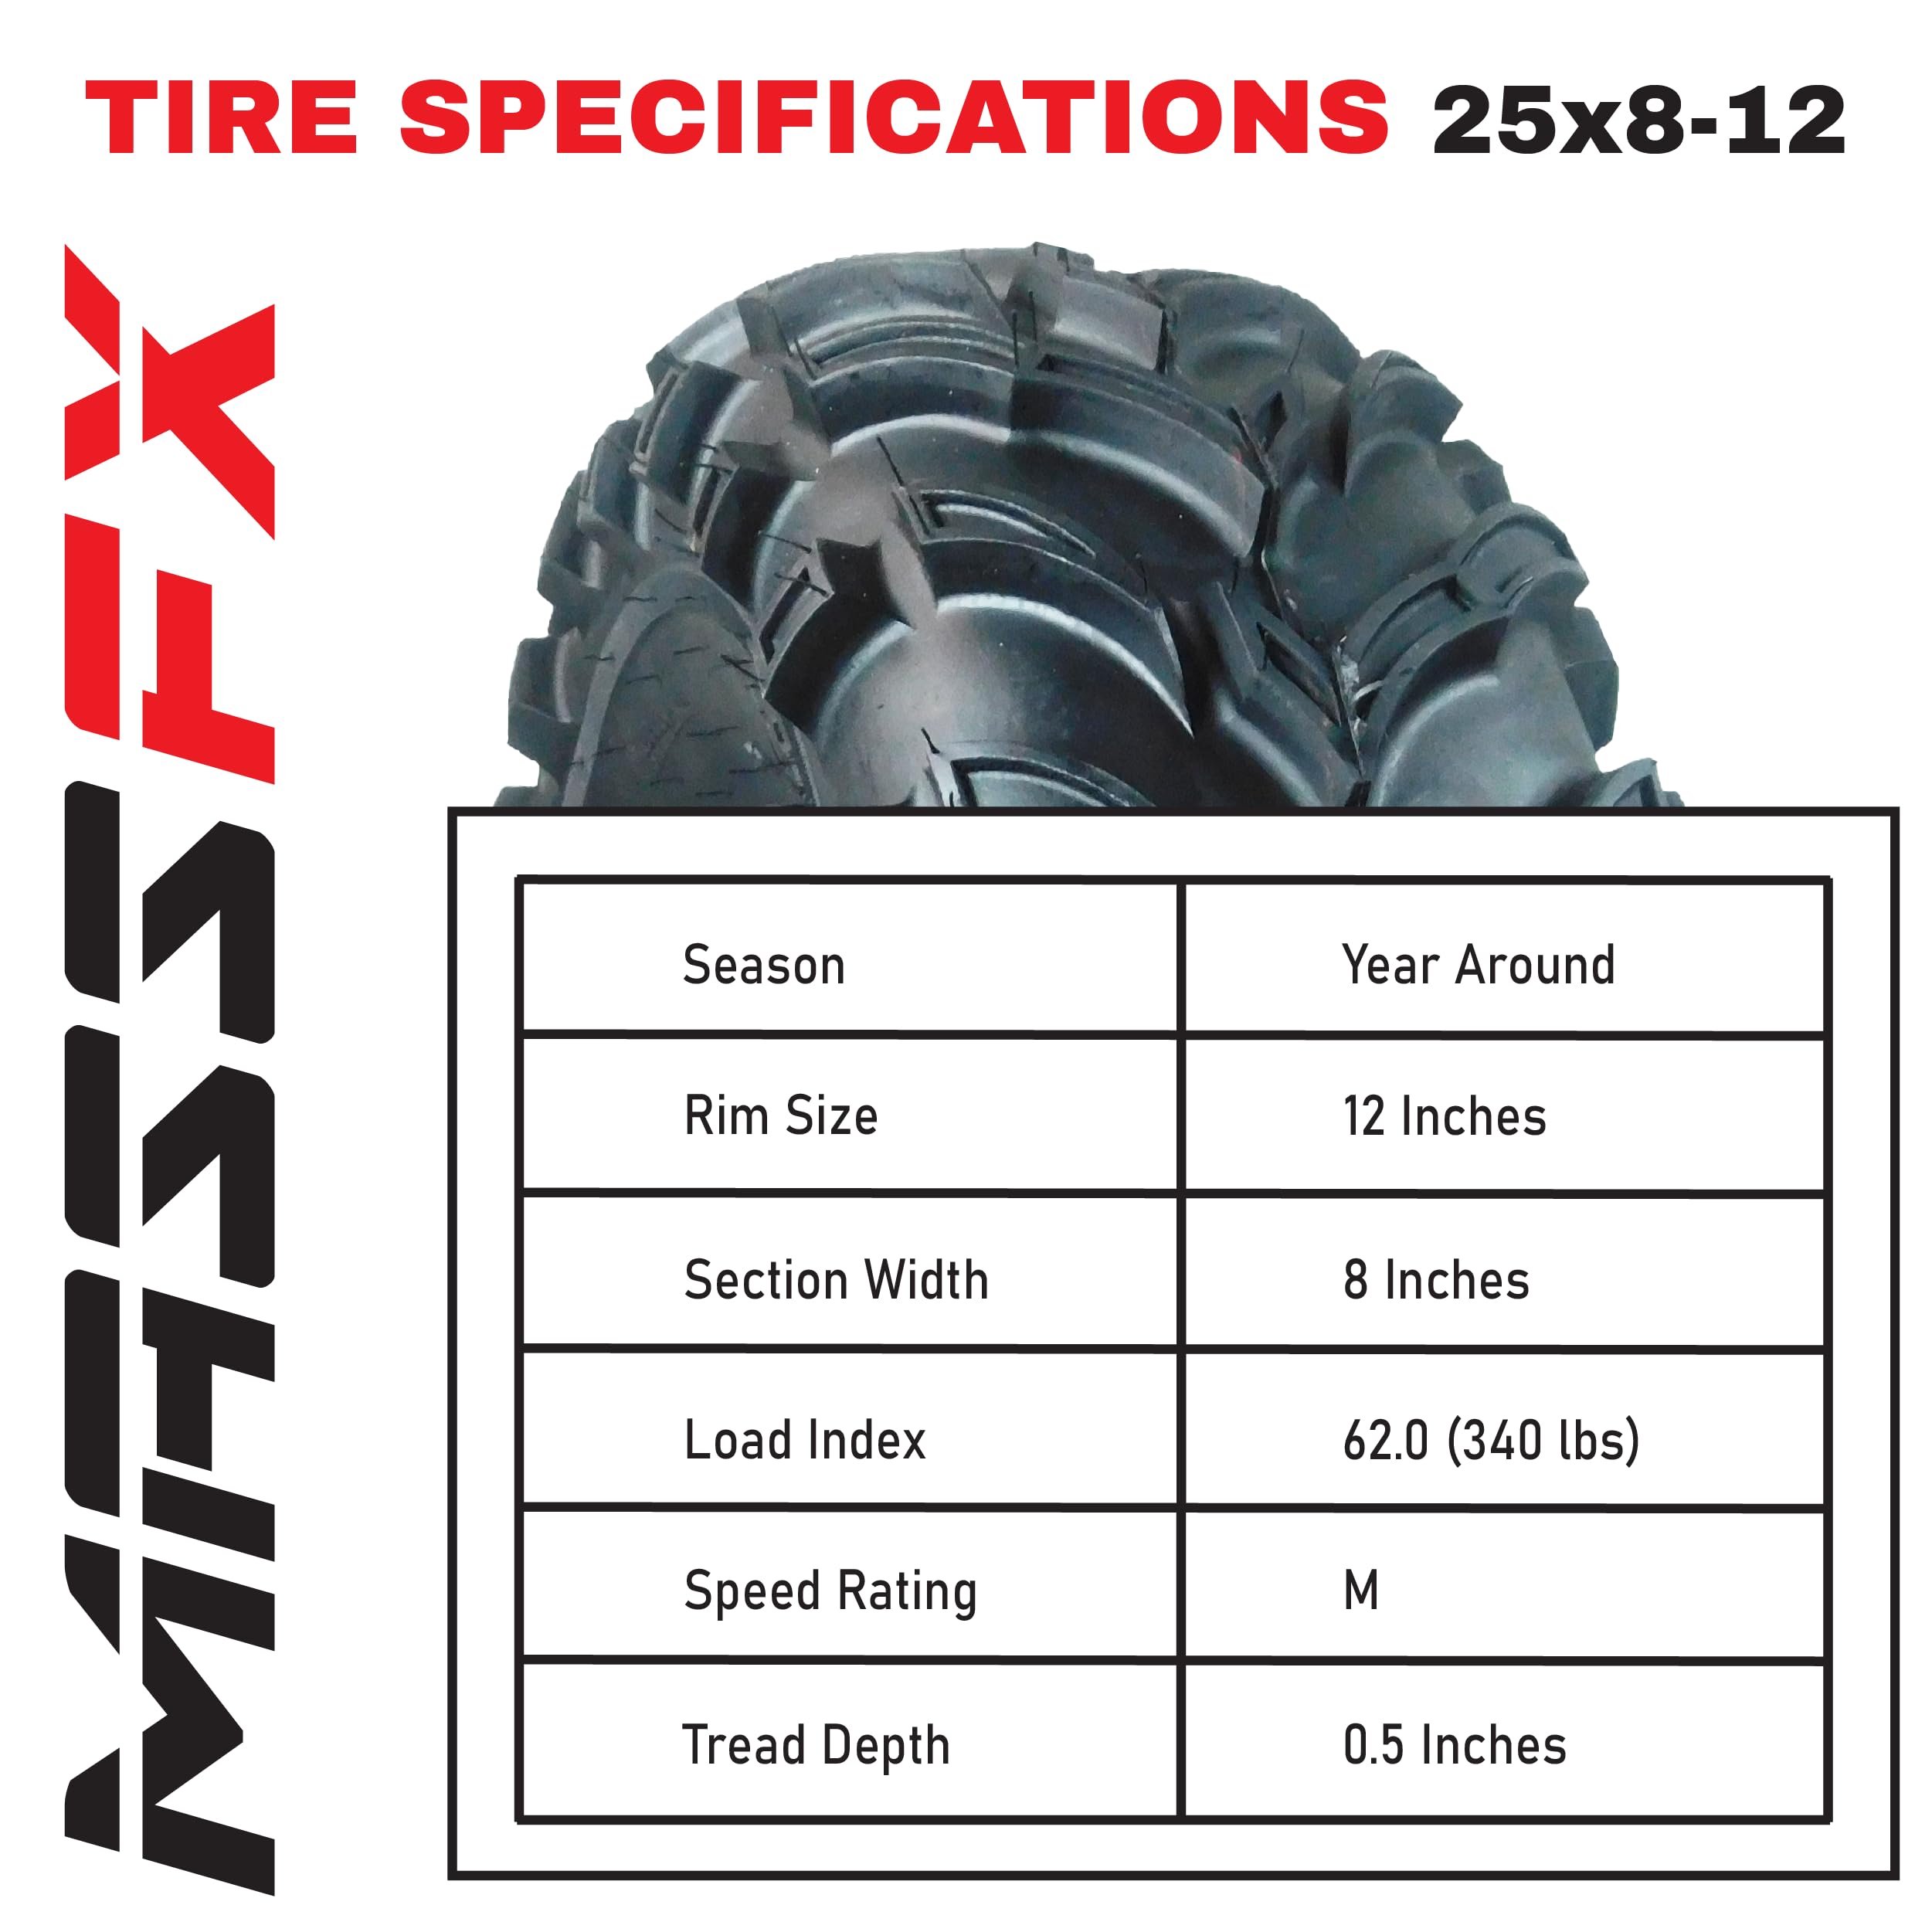 MASSFX P377 ATV/UTV Front Tires 25x8-12 - Set of 2 (25x8x12) 2 Pack